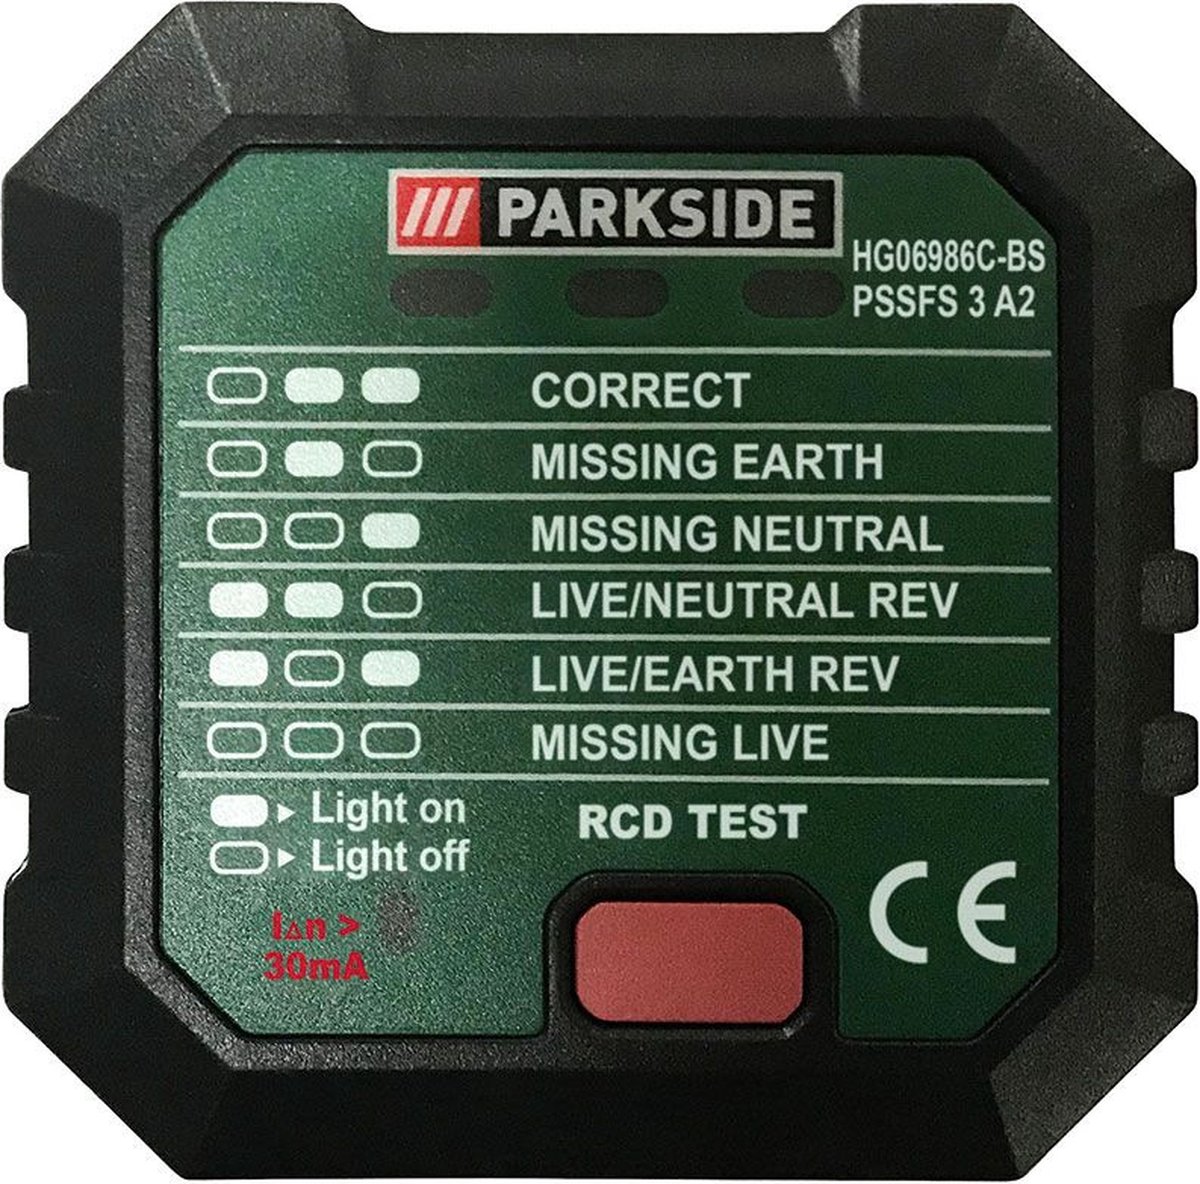 Parkside Contactdoostester PSSFS 3 A2